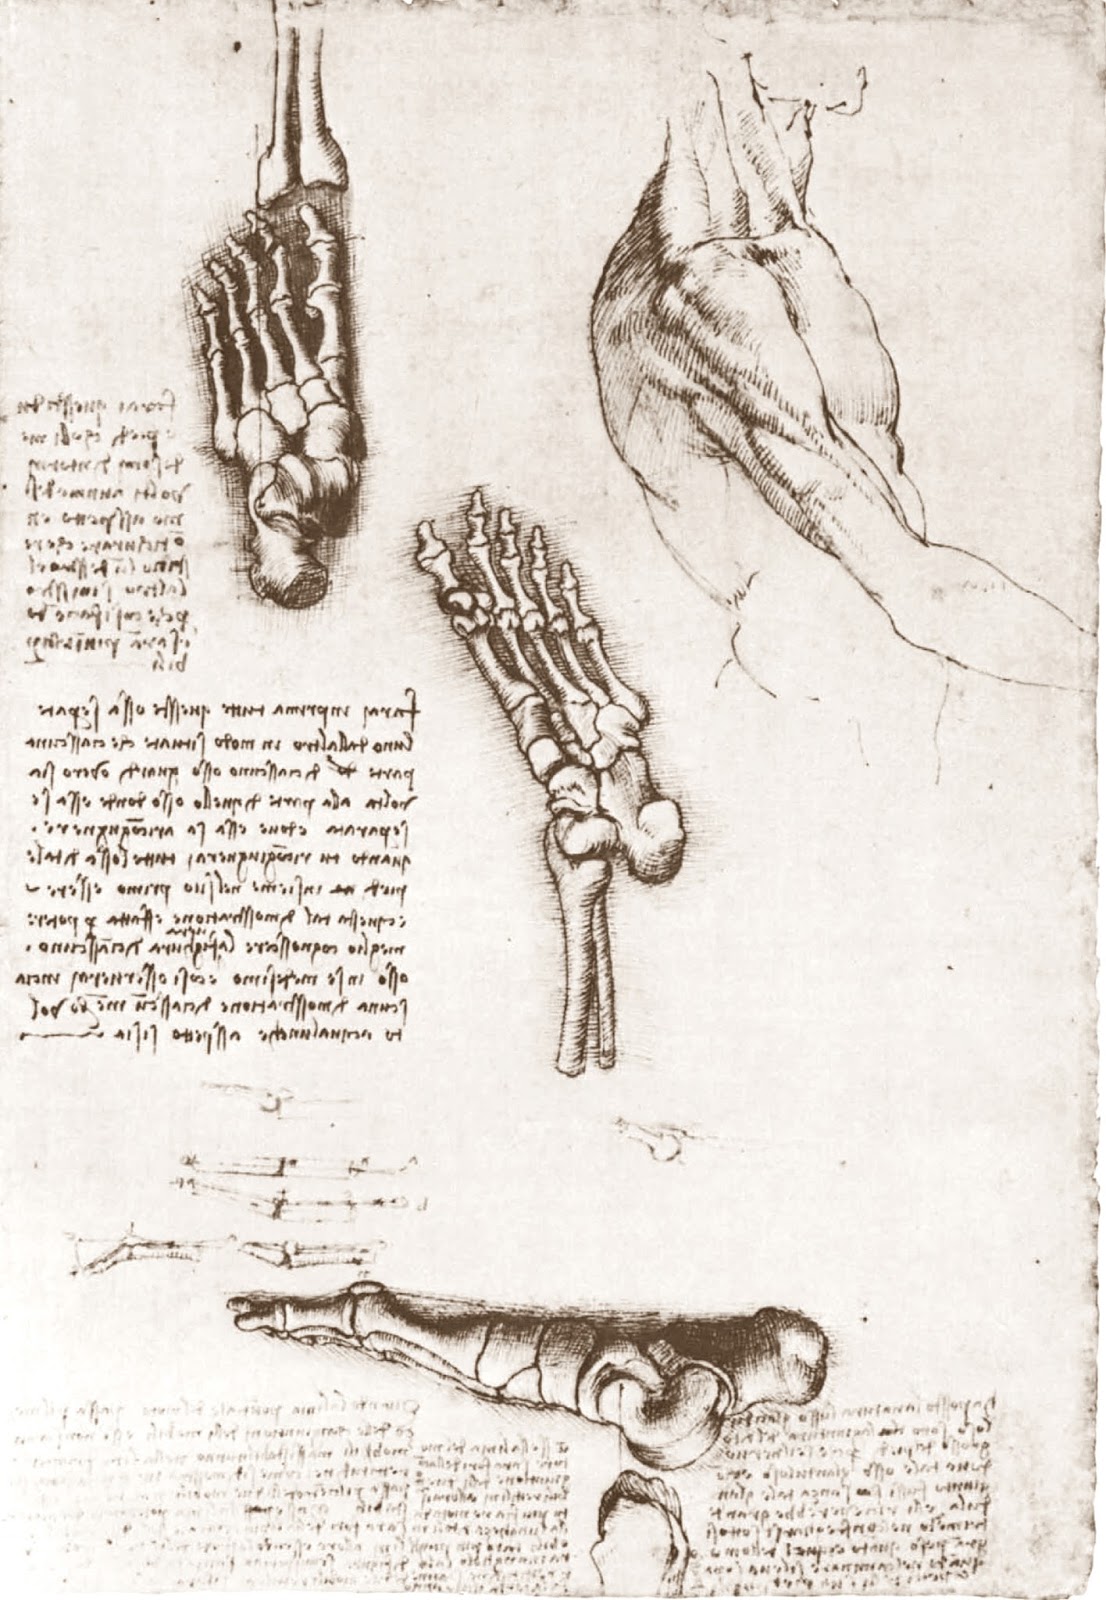 Leonardo+da+Vinci-1452-1519 (802).jpg